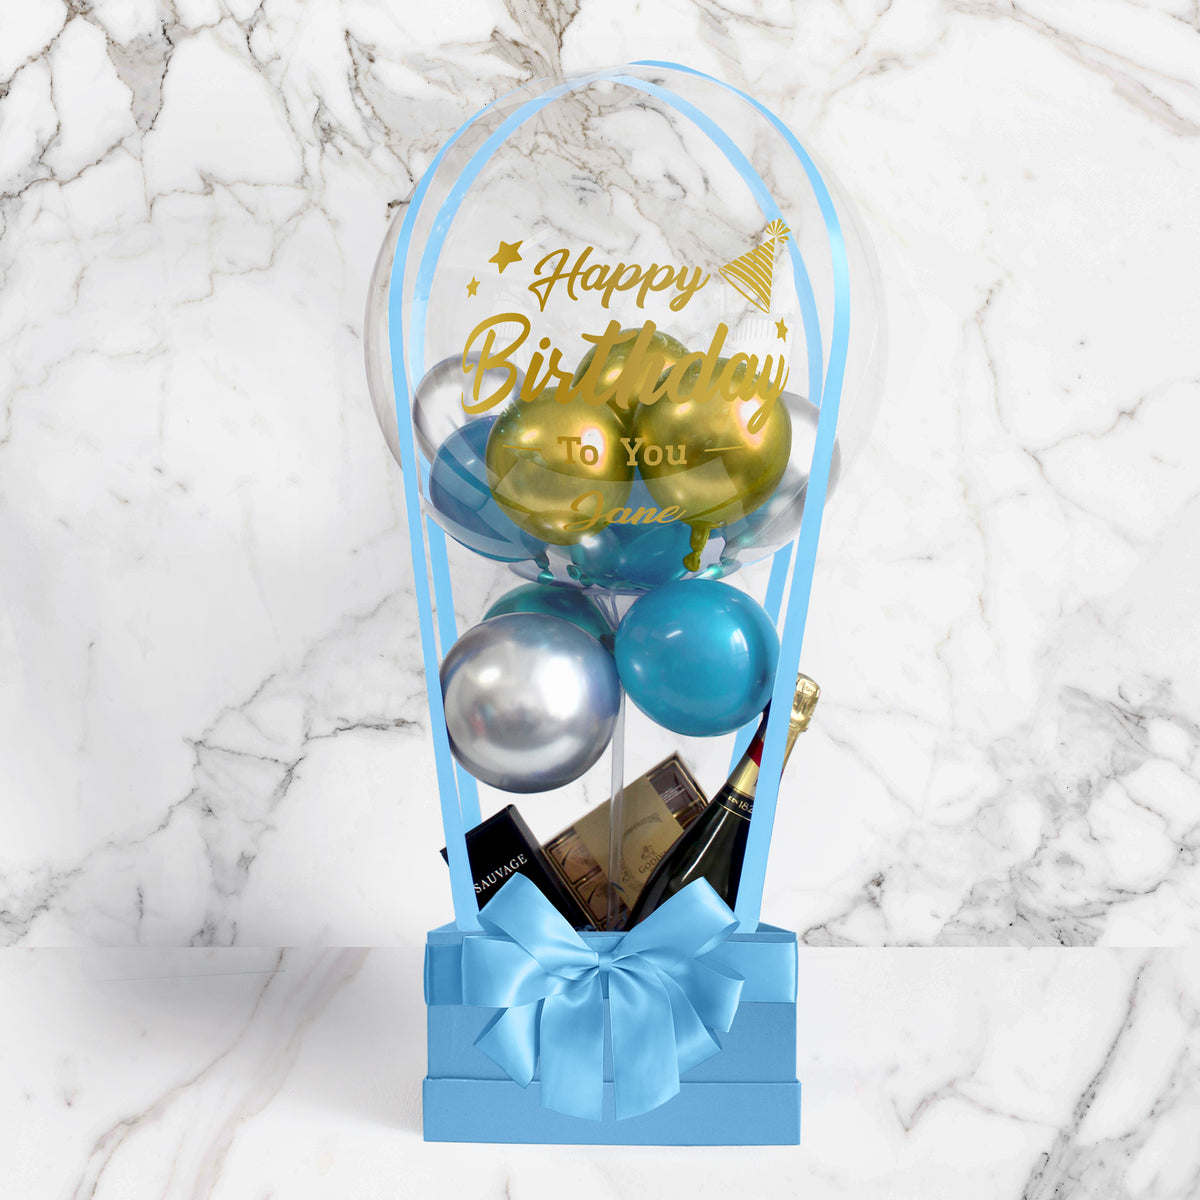 Balloon Birthday Hamper| Champagne birthday balloon gift, Valentine's Day, Anniversary Balloon Romantic Gift Box